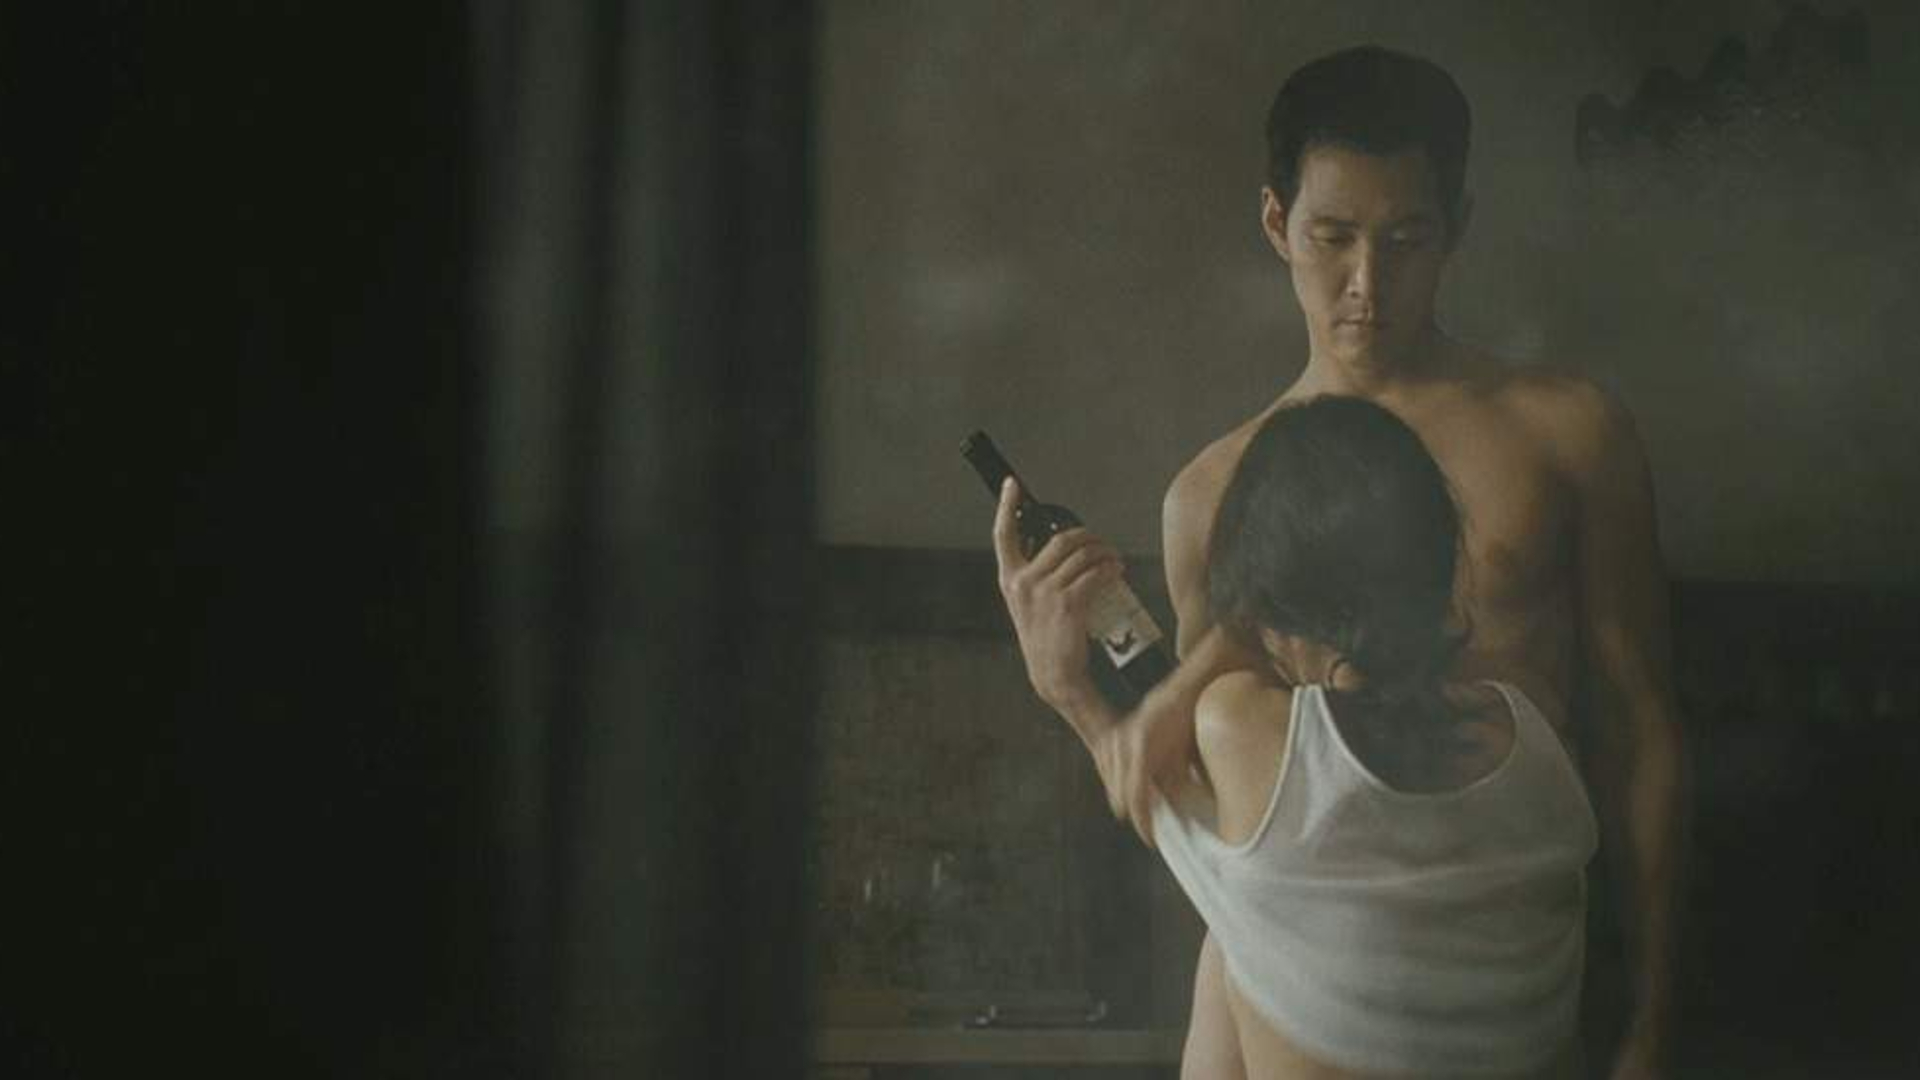 Korean Movies With Sex Scenes